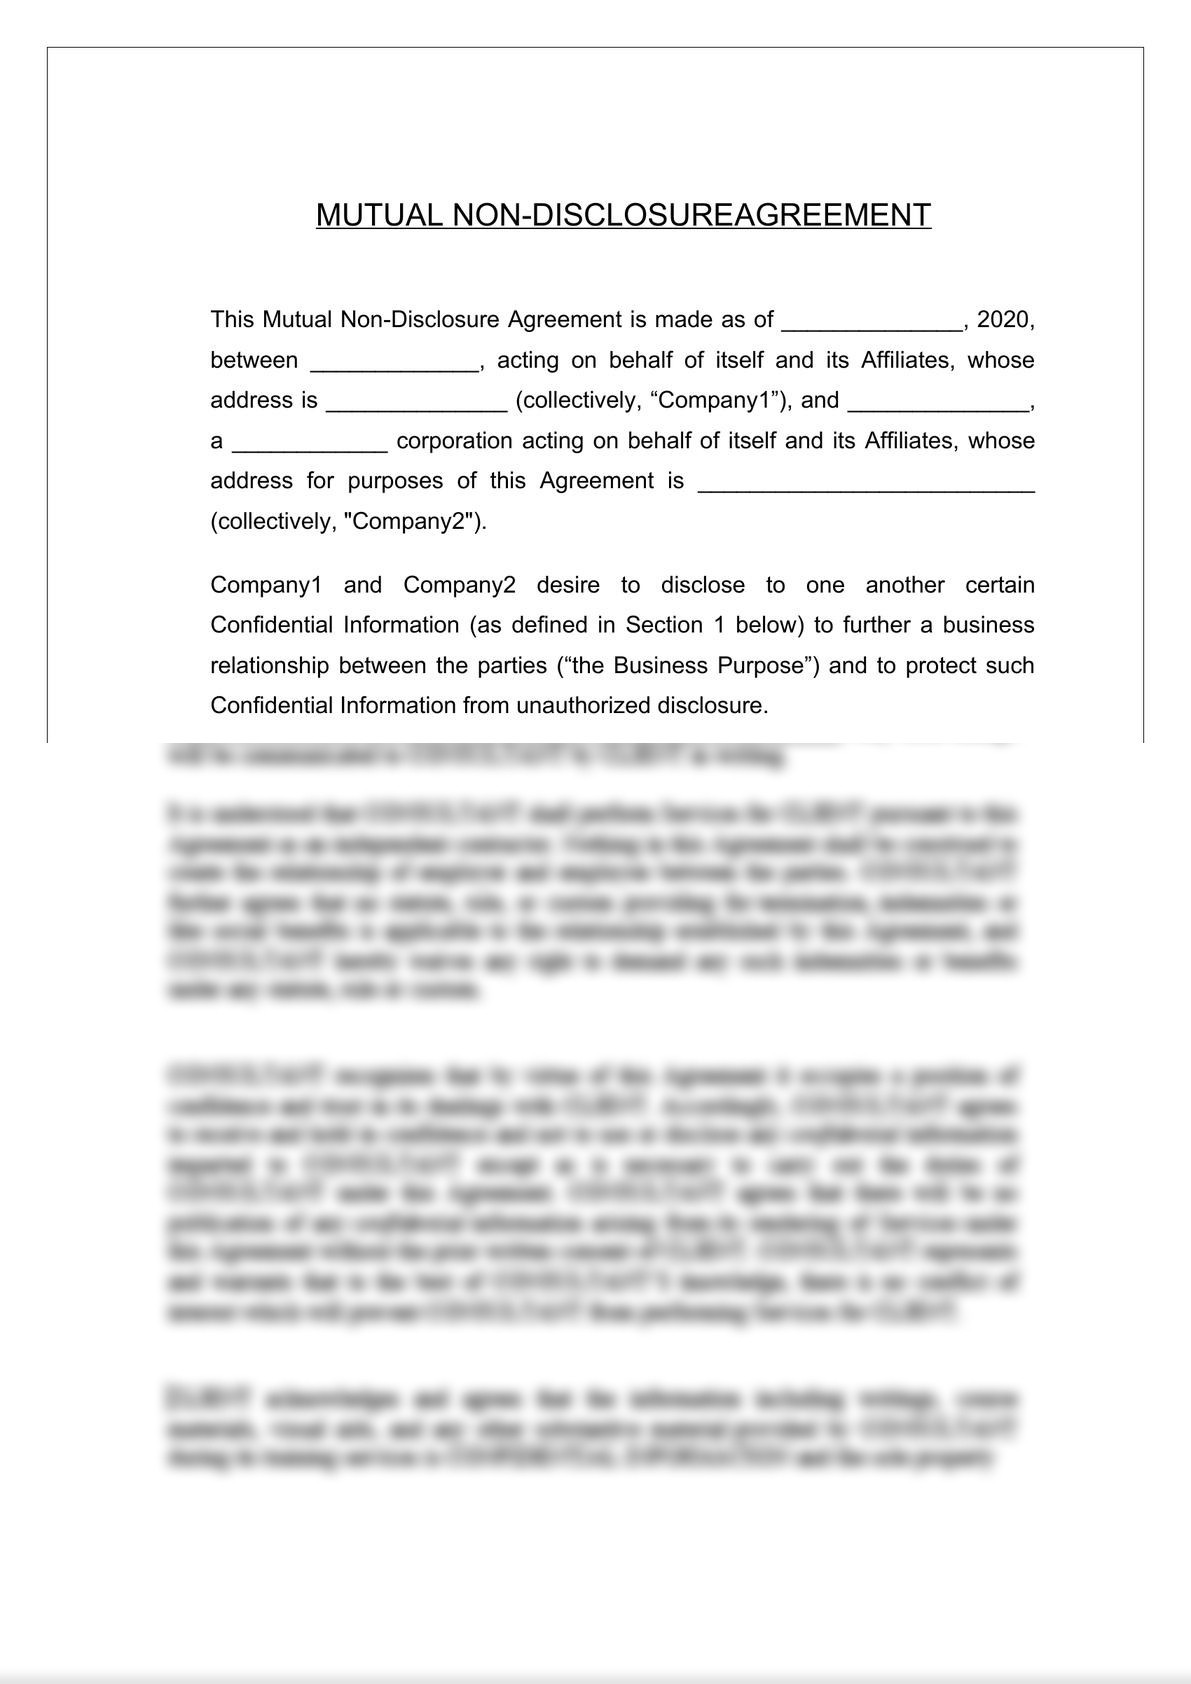 Mutual Non-Disclosure Agreement-1